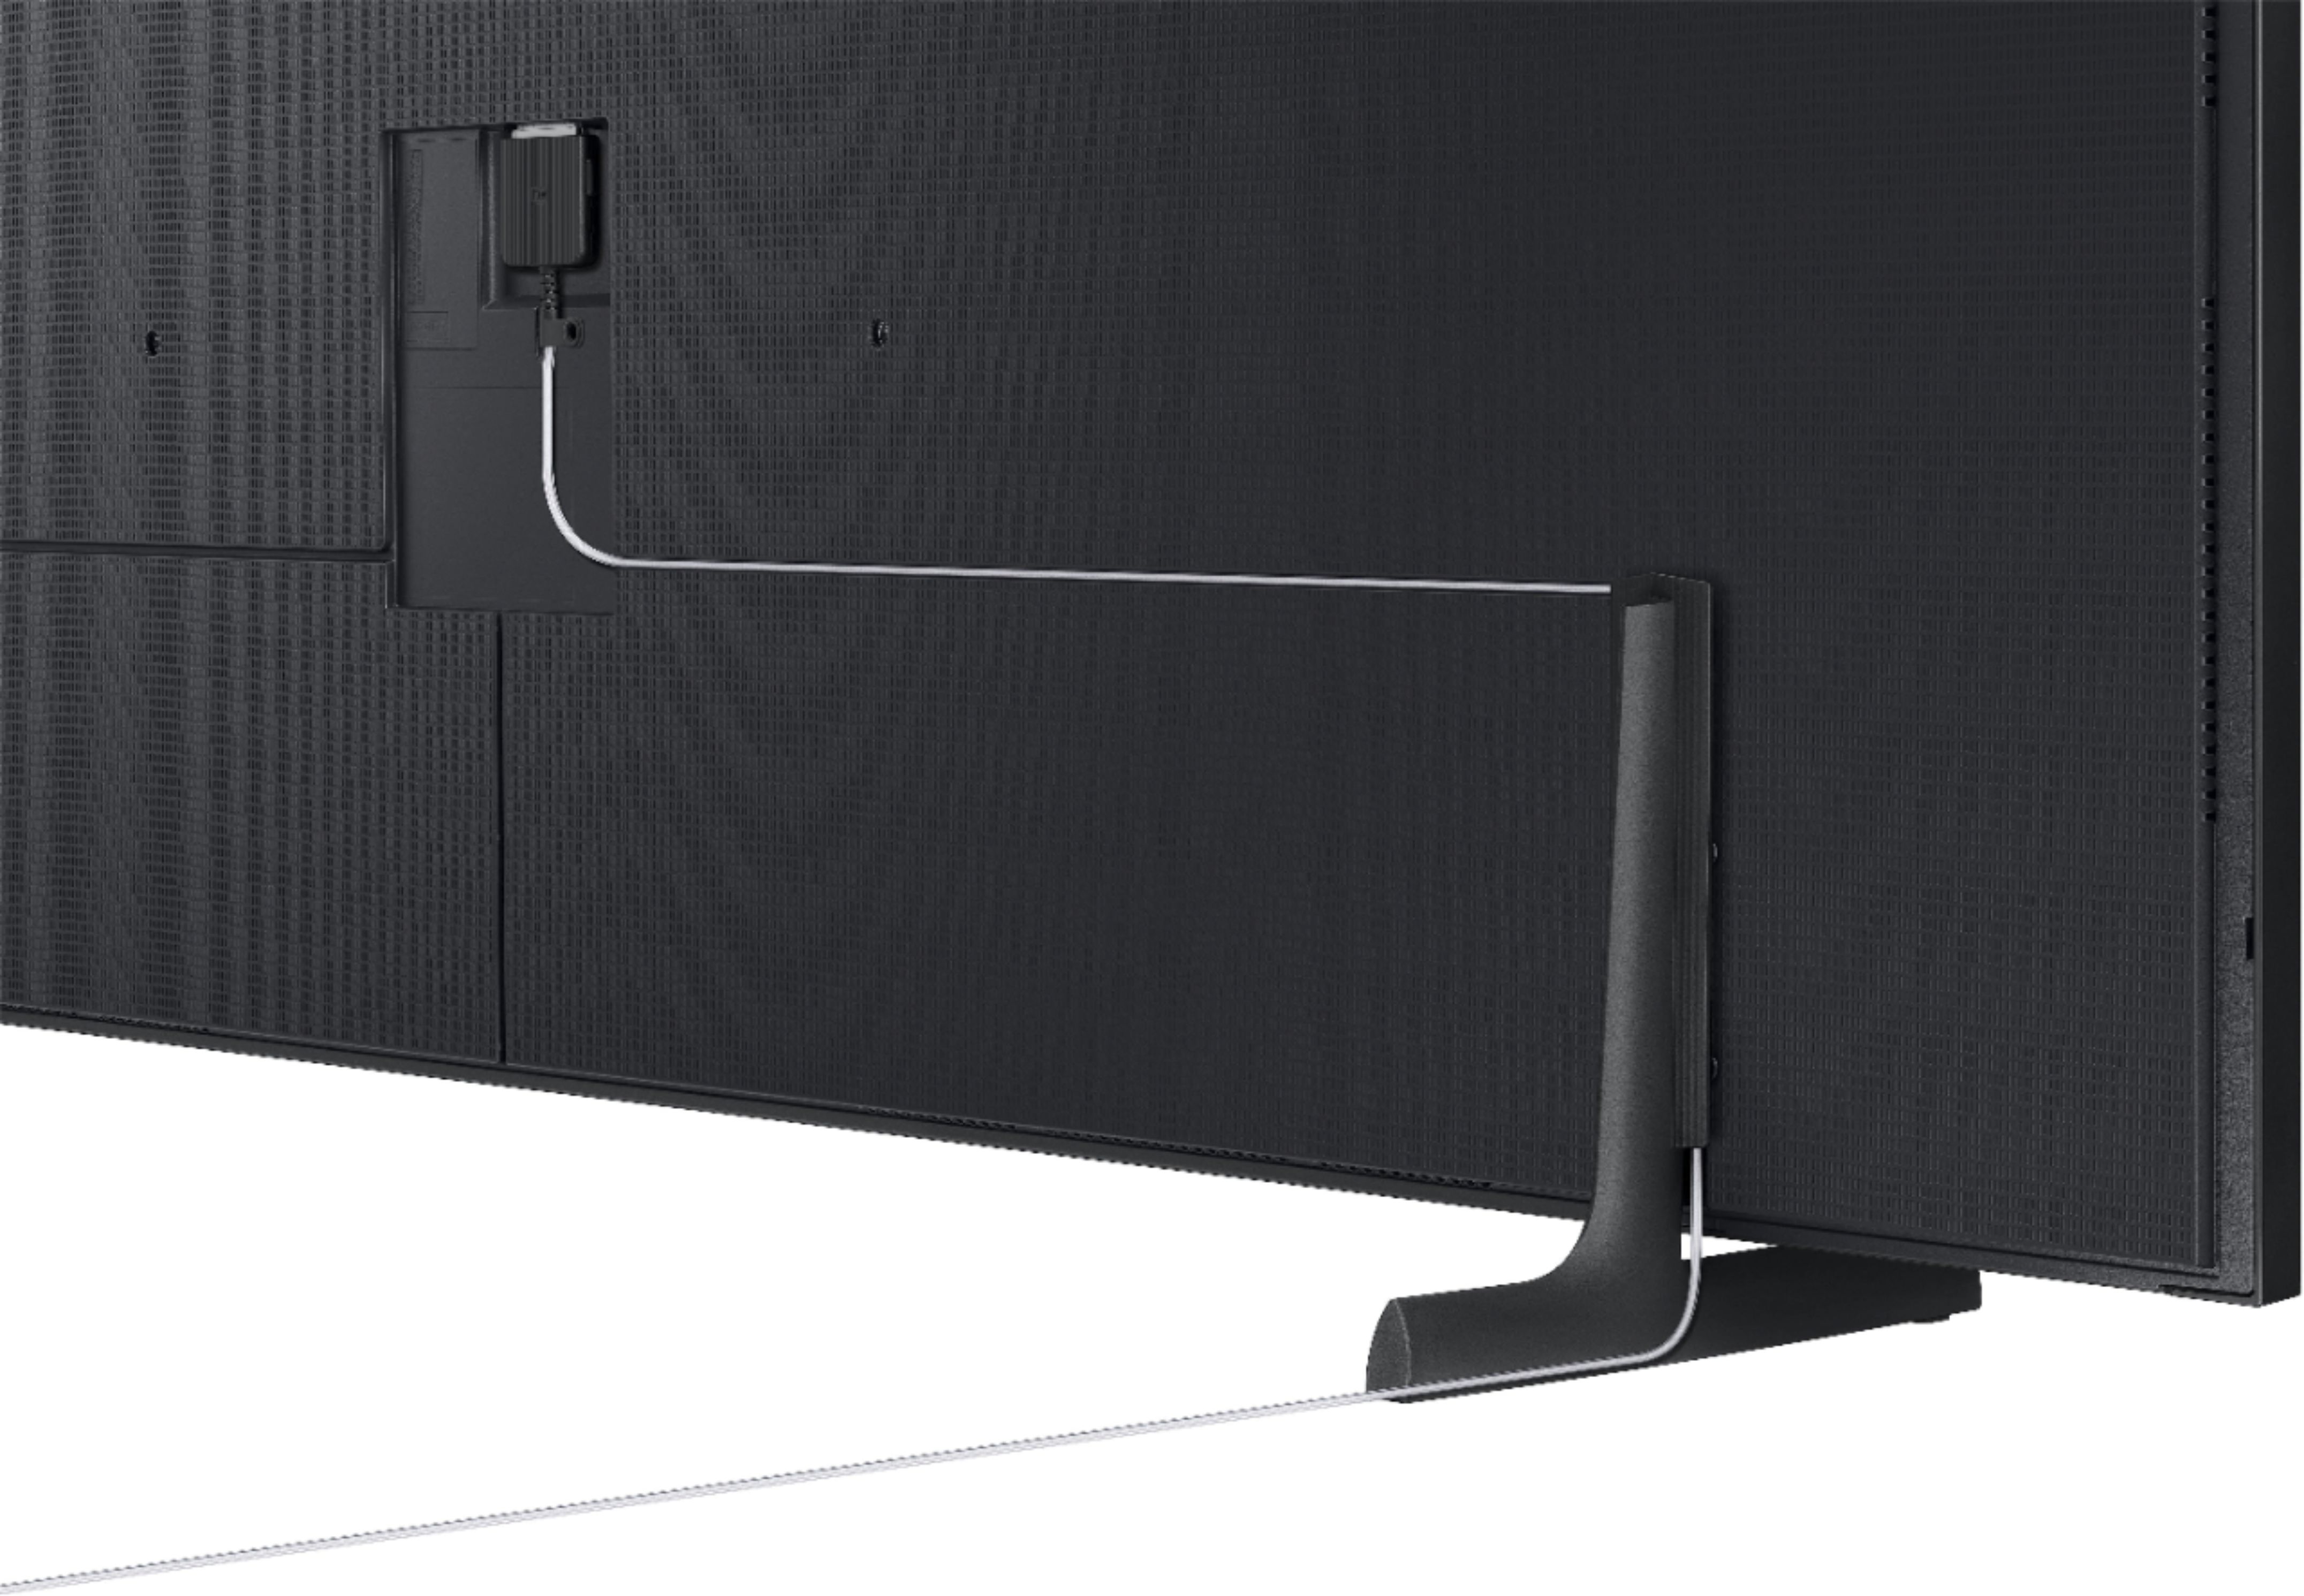 SAMSUNG 55-Inch Class Frame Series - 4K Quantum HDR Smart TV with Alexa  Built-in (QN55LS03AAFXZA, 2021 Model)